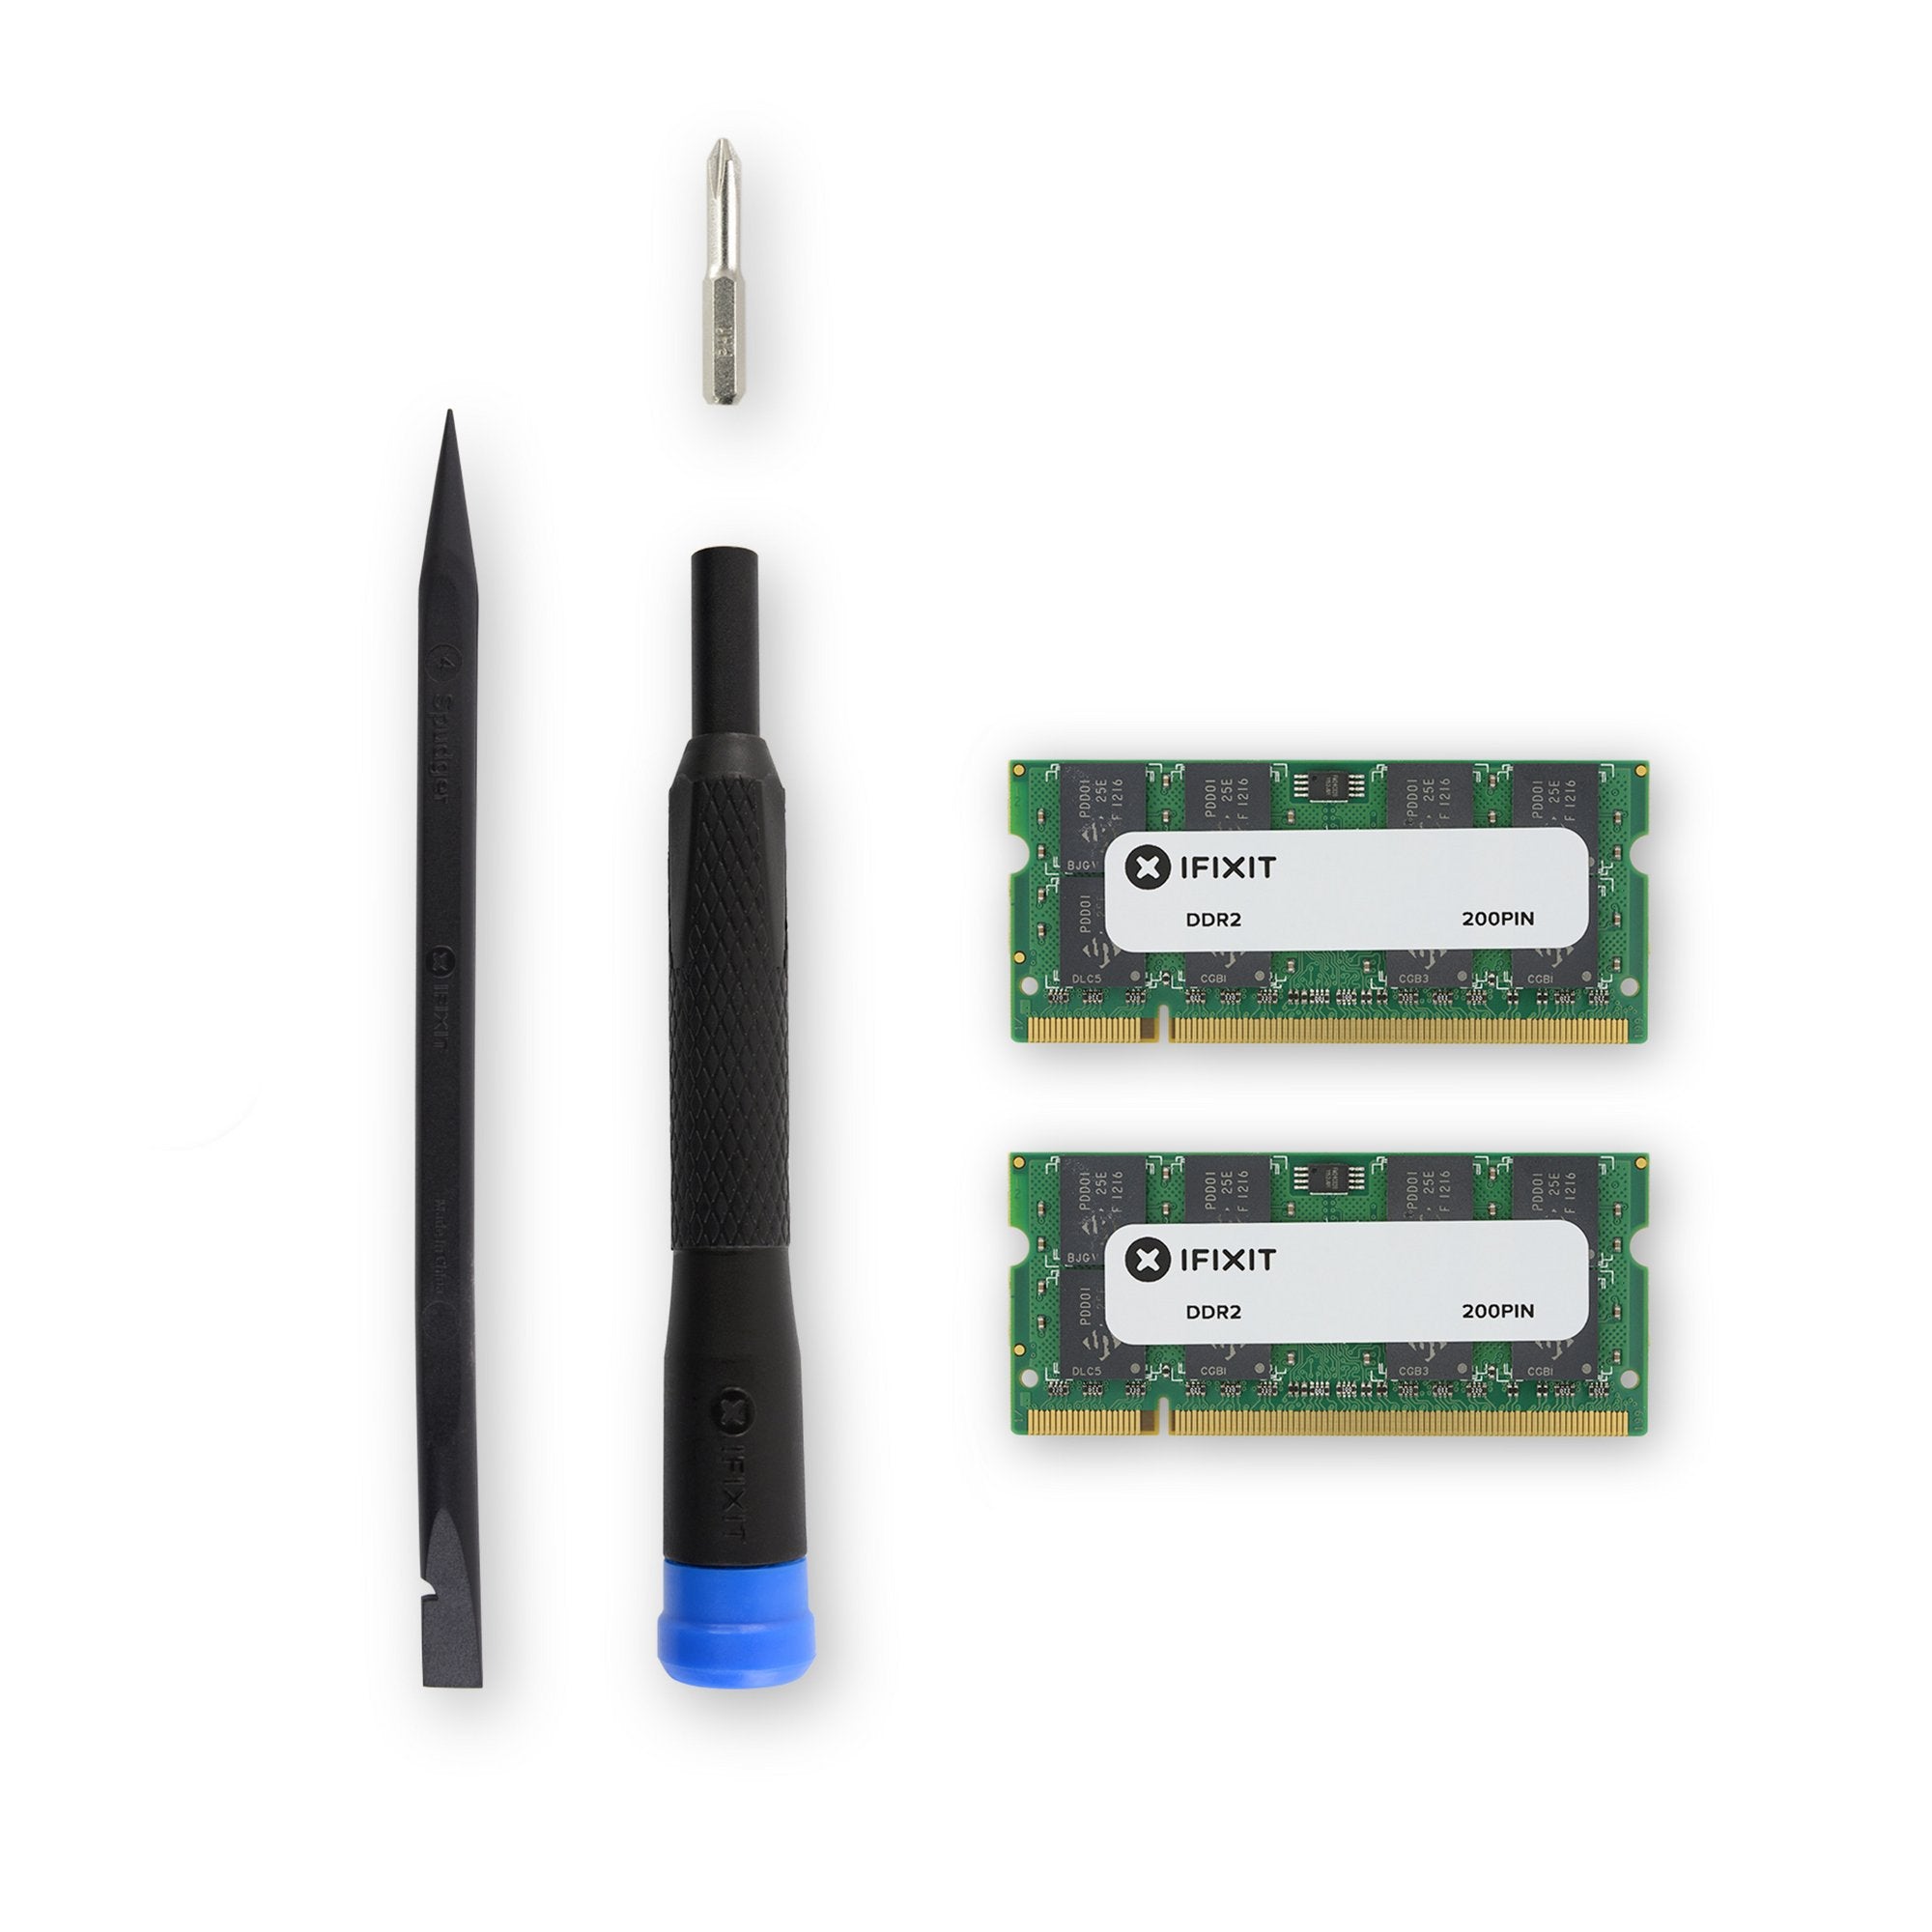 iMac Intel 20" EMC 2105 (Early 2006) Memory Maxxer RAM Upgrade Kit